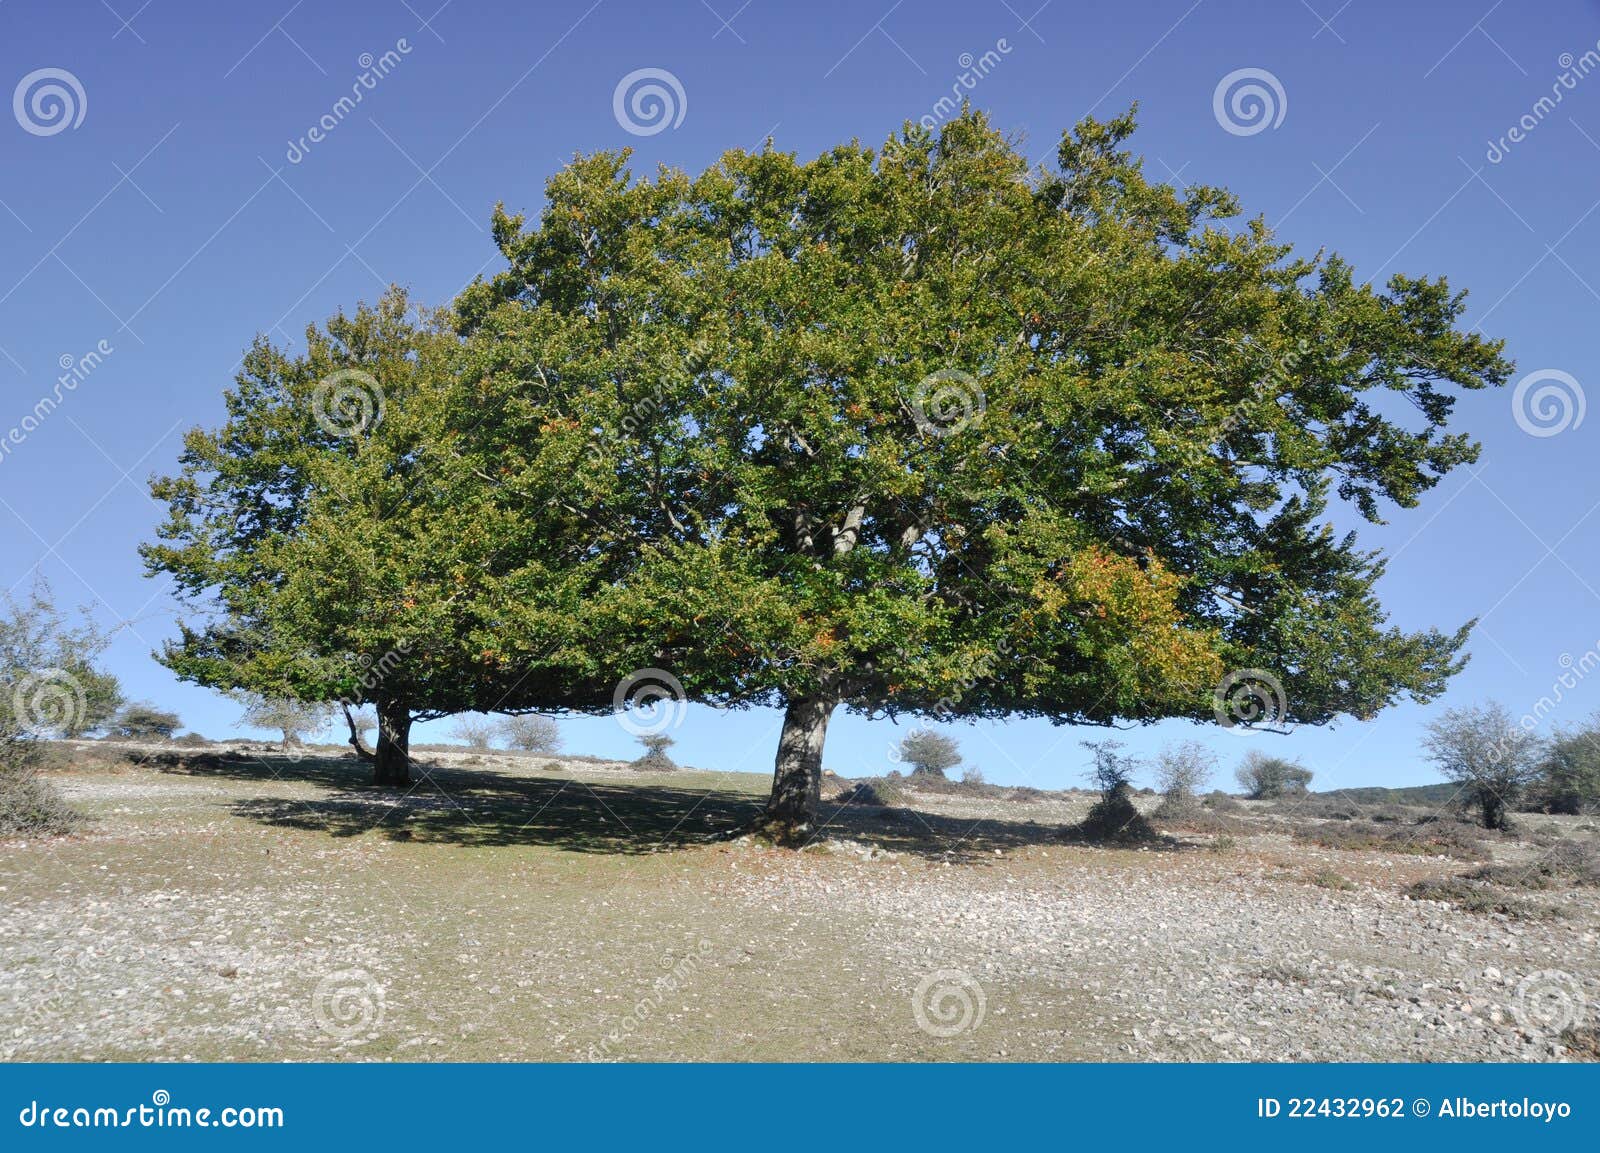 holm oak, urbasa range, navarre